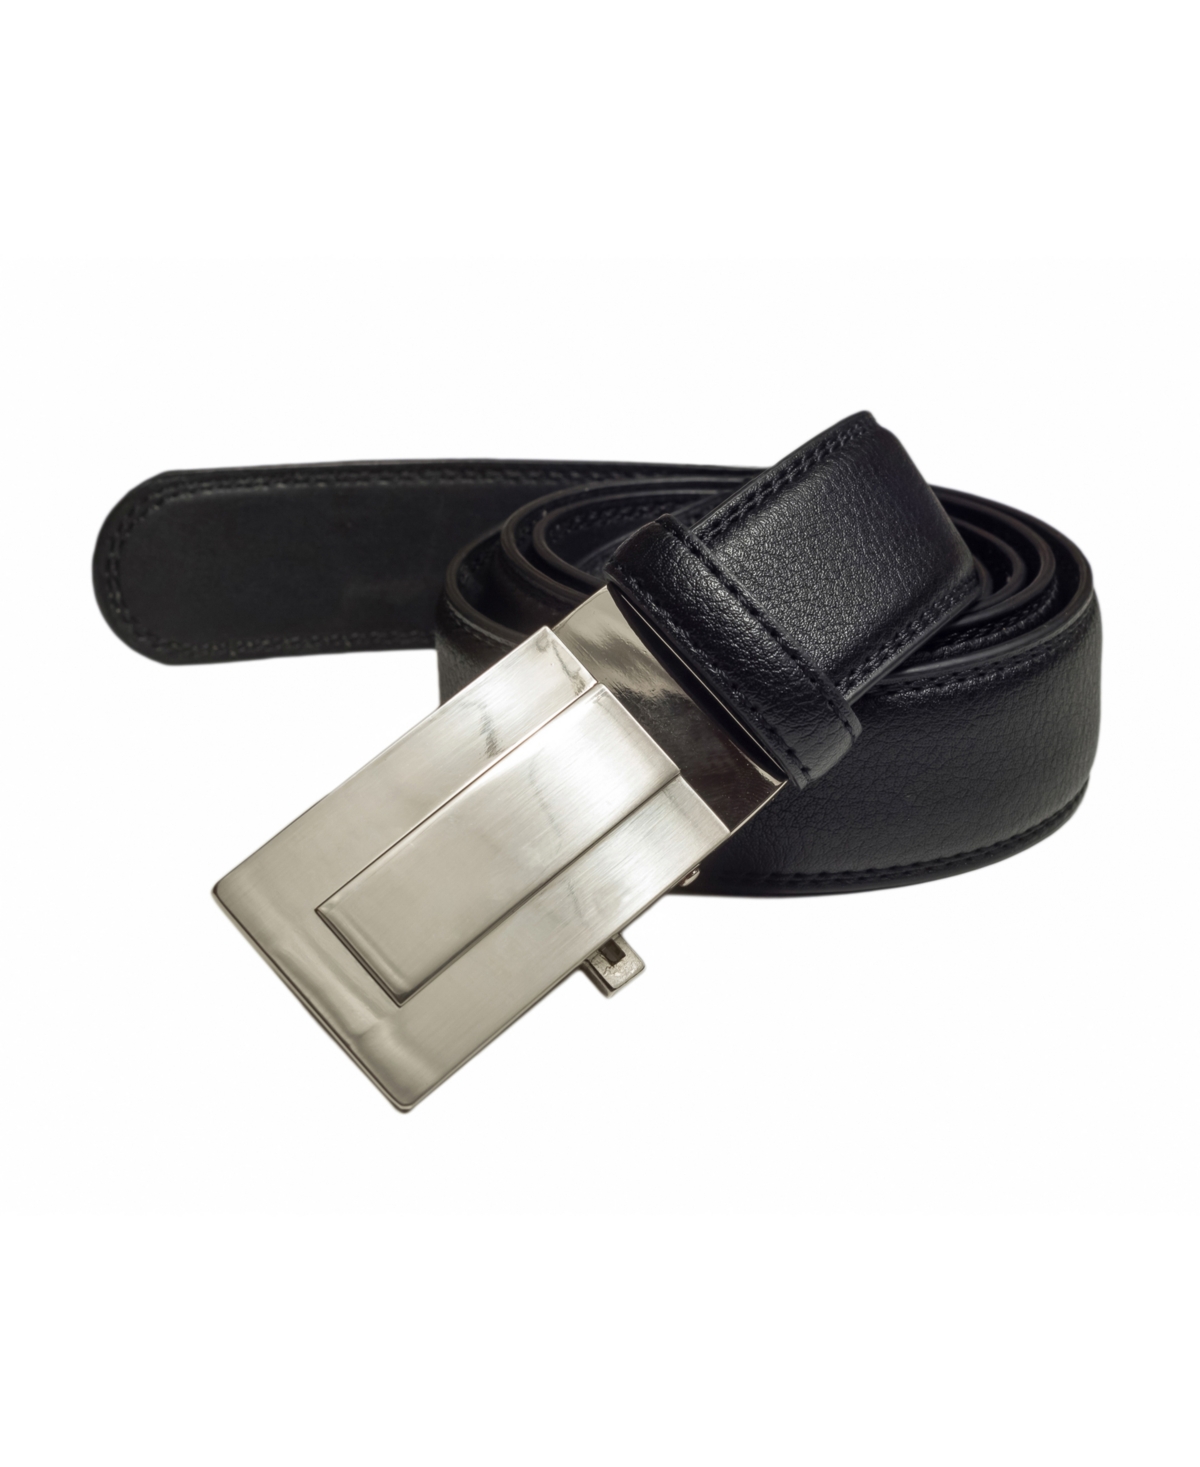 Automatic and Adjustable Belt - Black